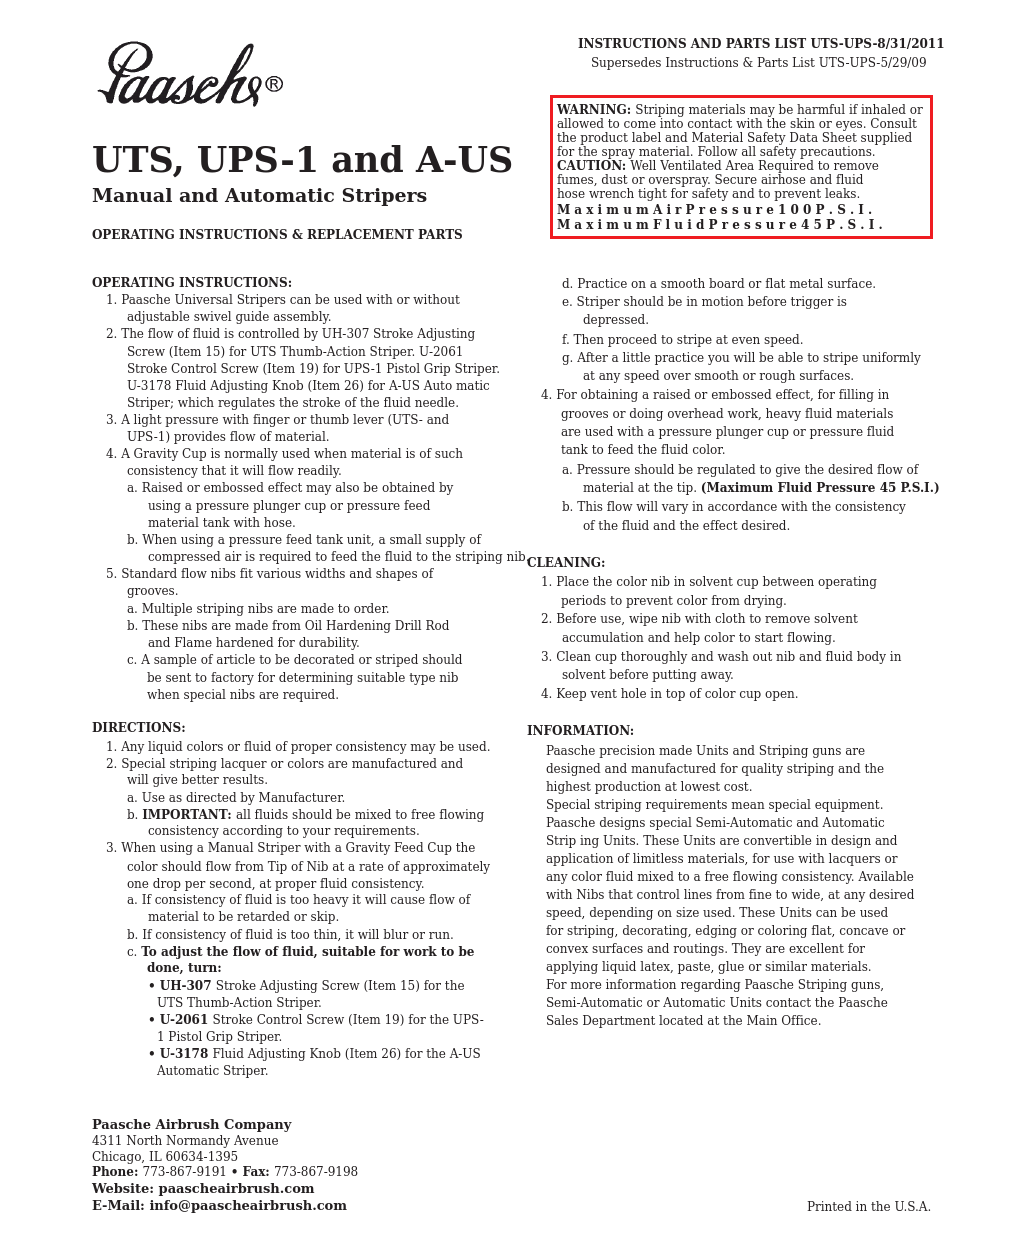 UPS-1